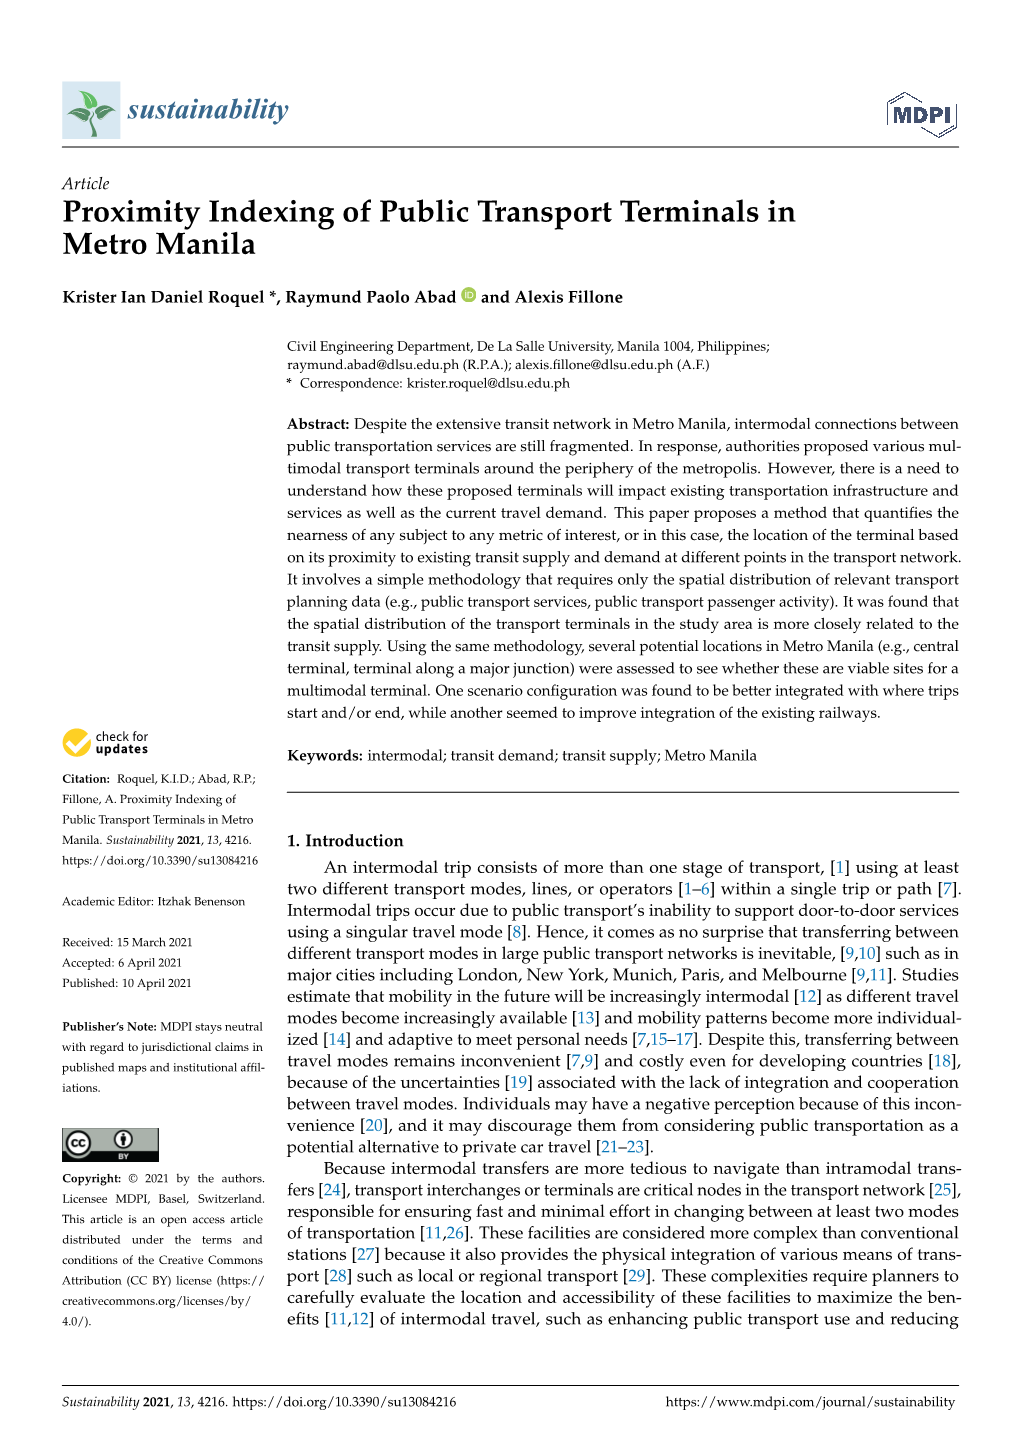 Proximity Indexing of Public Transport Terminals in Metro Manila